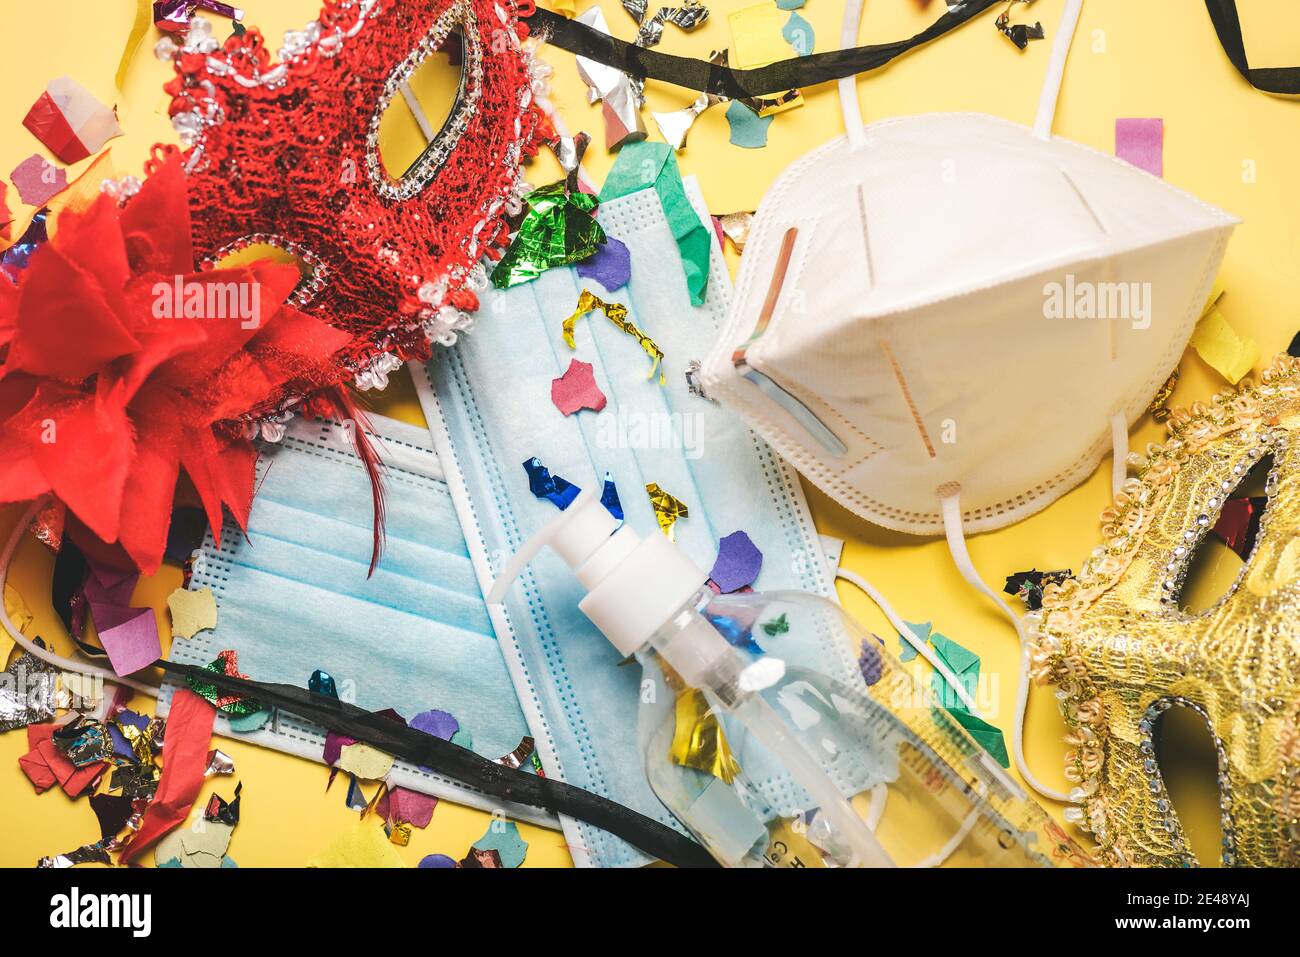 carnival masks with Protective surgical masks and sanitizer bottle on yellow background.Coronavirus epidemic concept Stock Photo